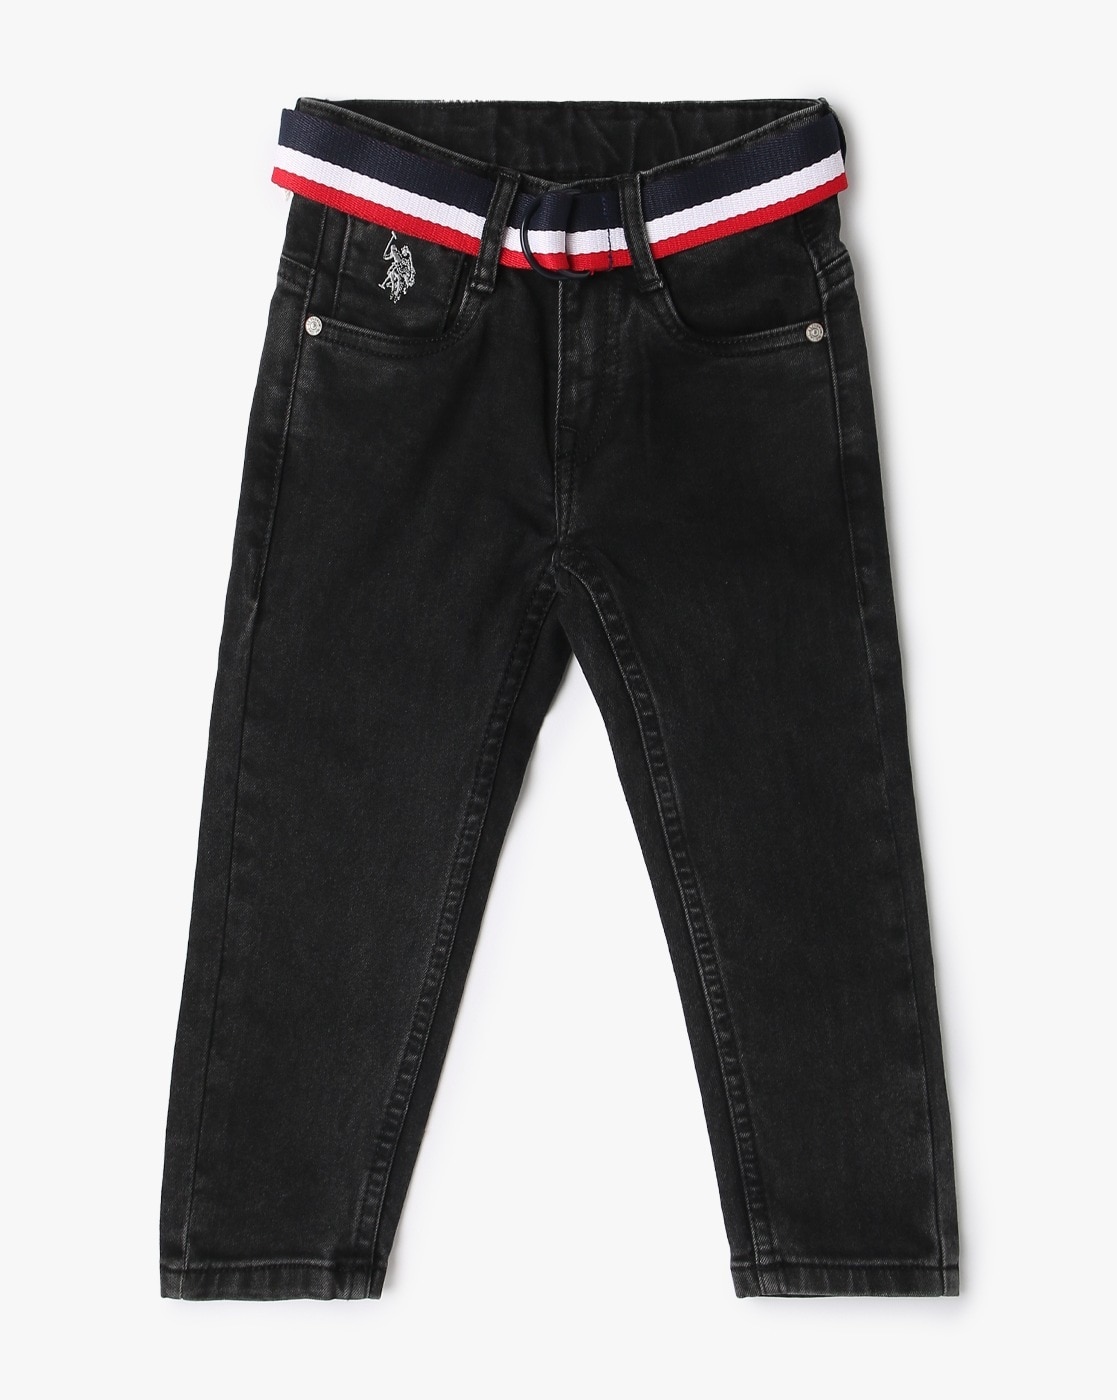 Latest Stylish Jeans Pants For Kids 2021-2022/ Boys Jeans Design Ideas/Kids  Denim Jeans - YouTube | Stylish jeans, Kids denim, Kids denim jeans